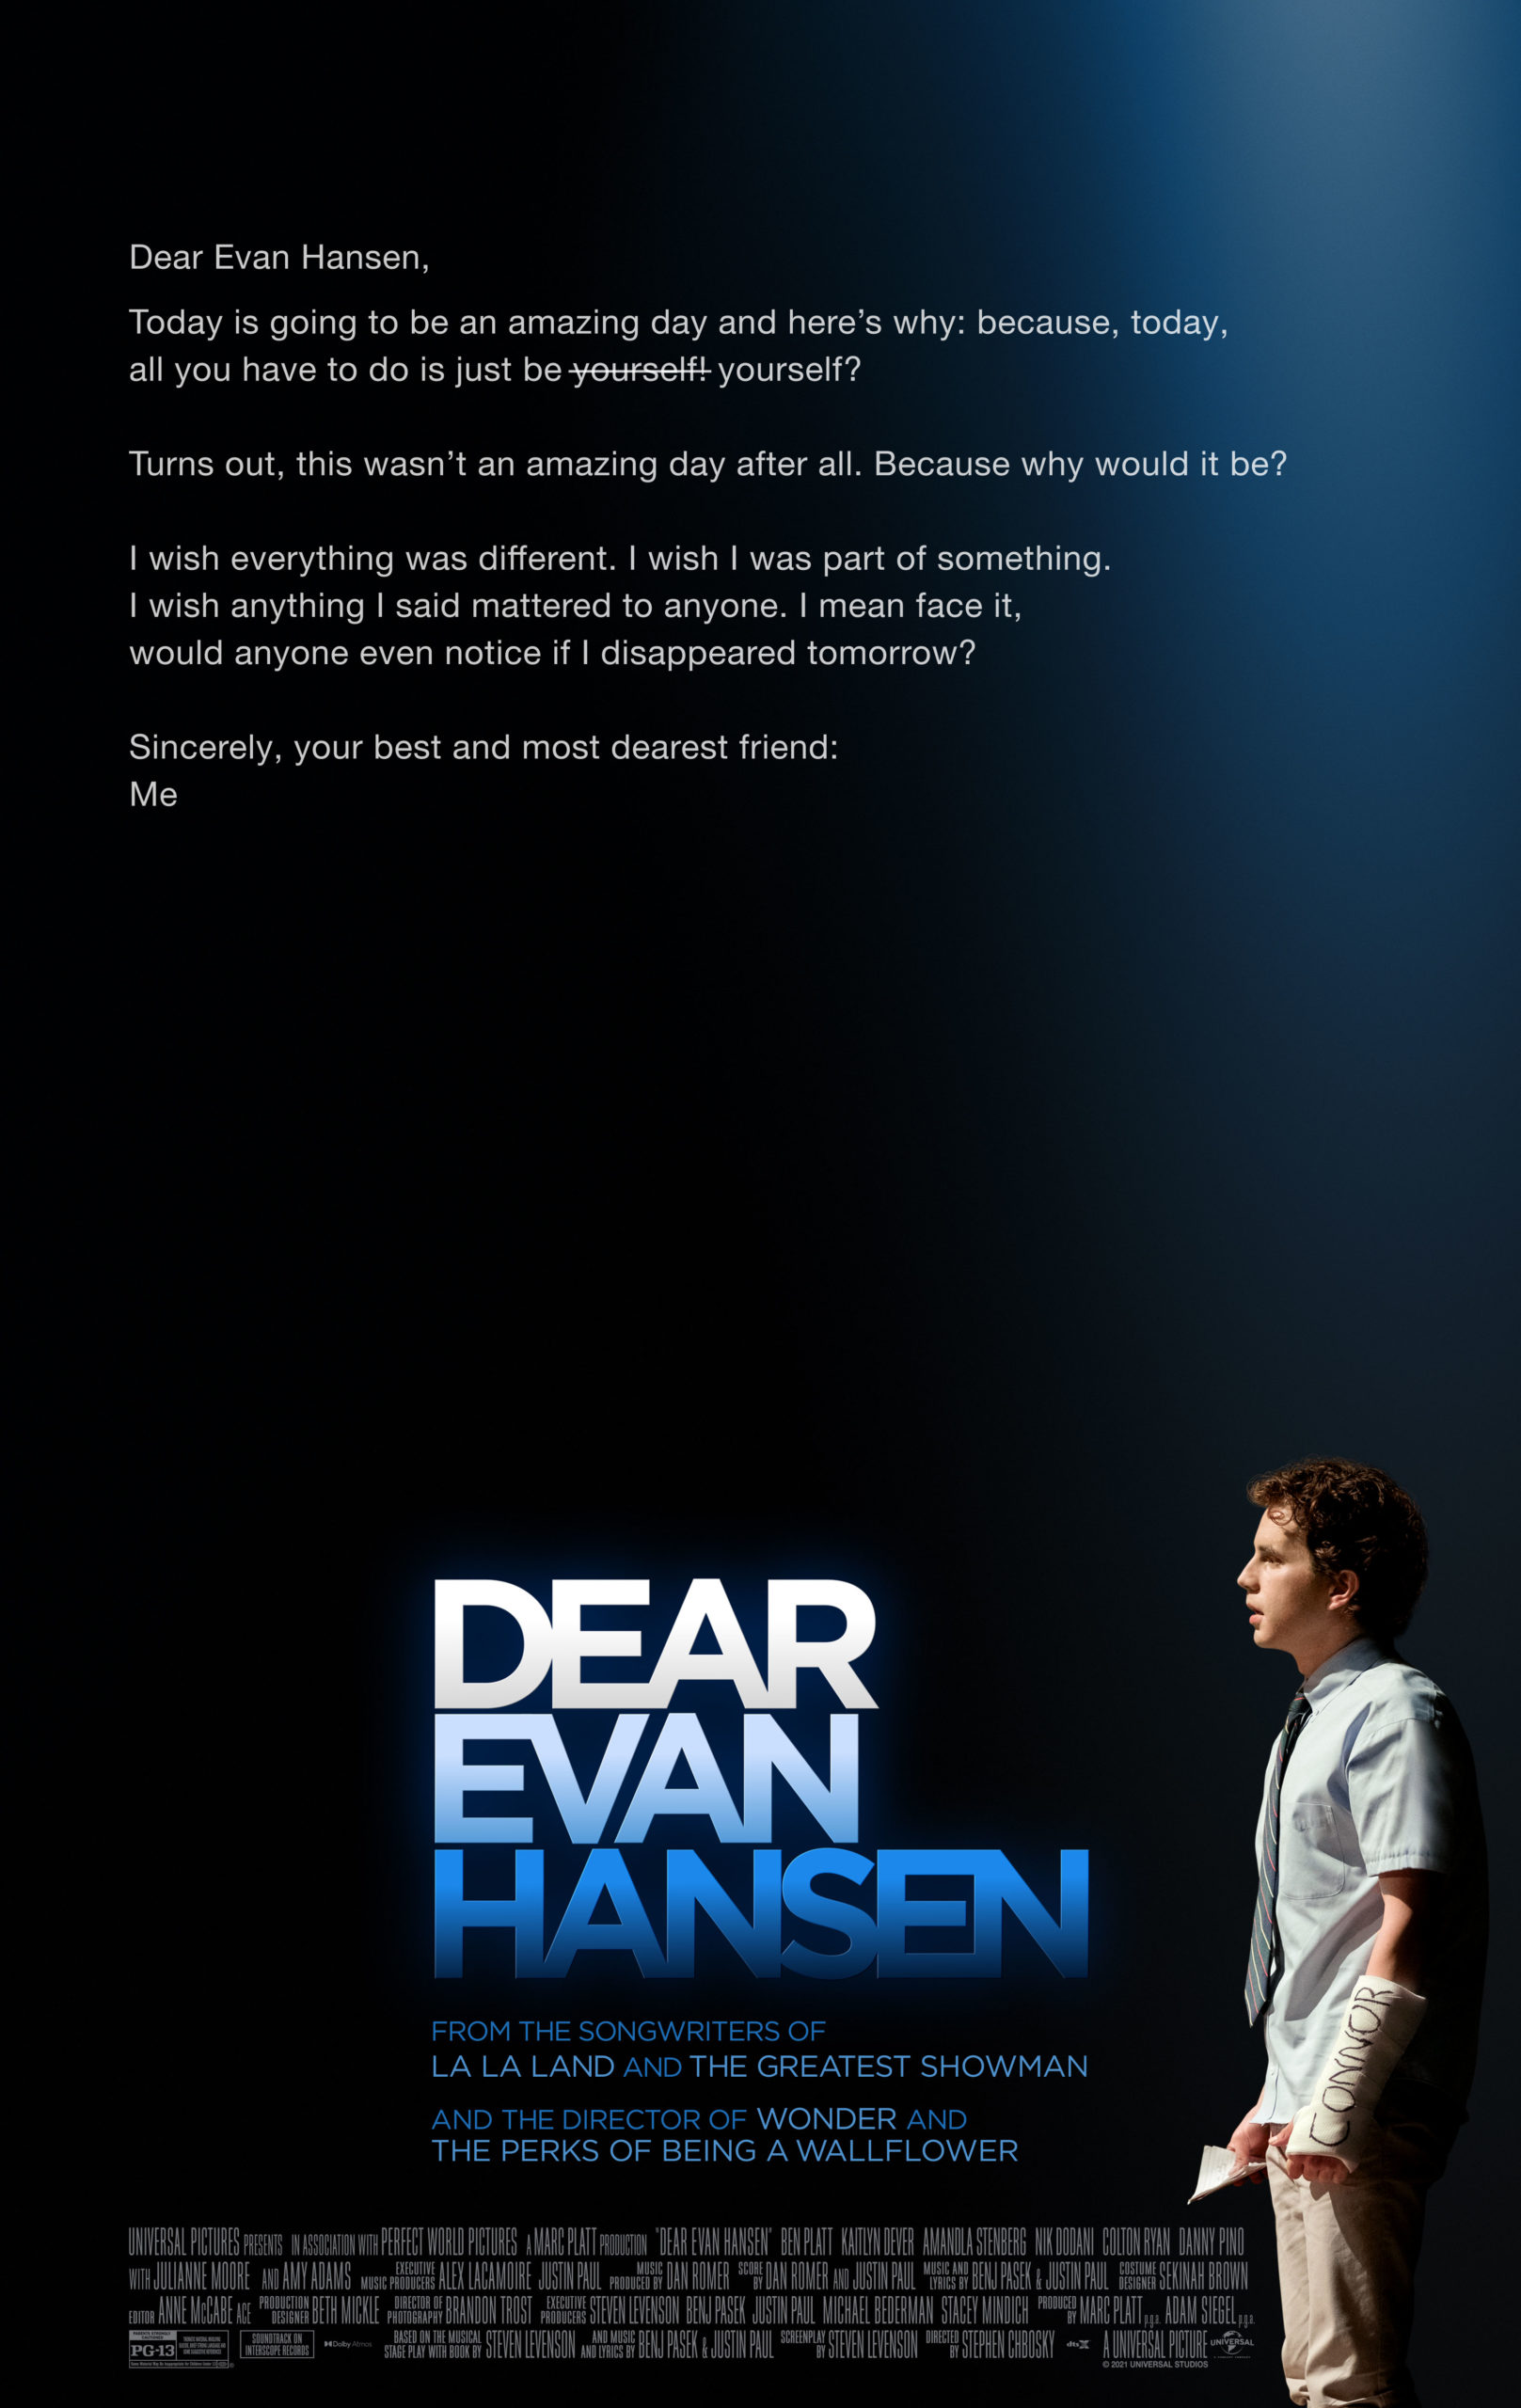 Dear Evan Hansen poster (Courtesy of Universal Pictures)